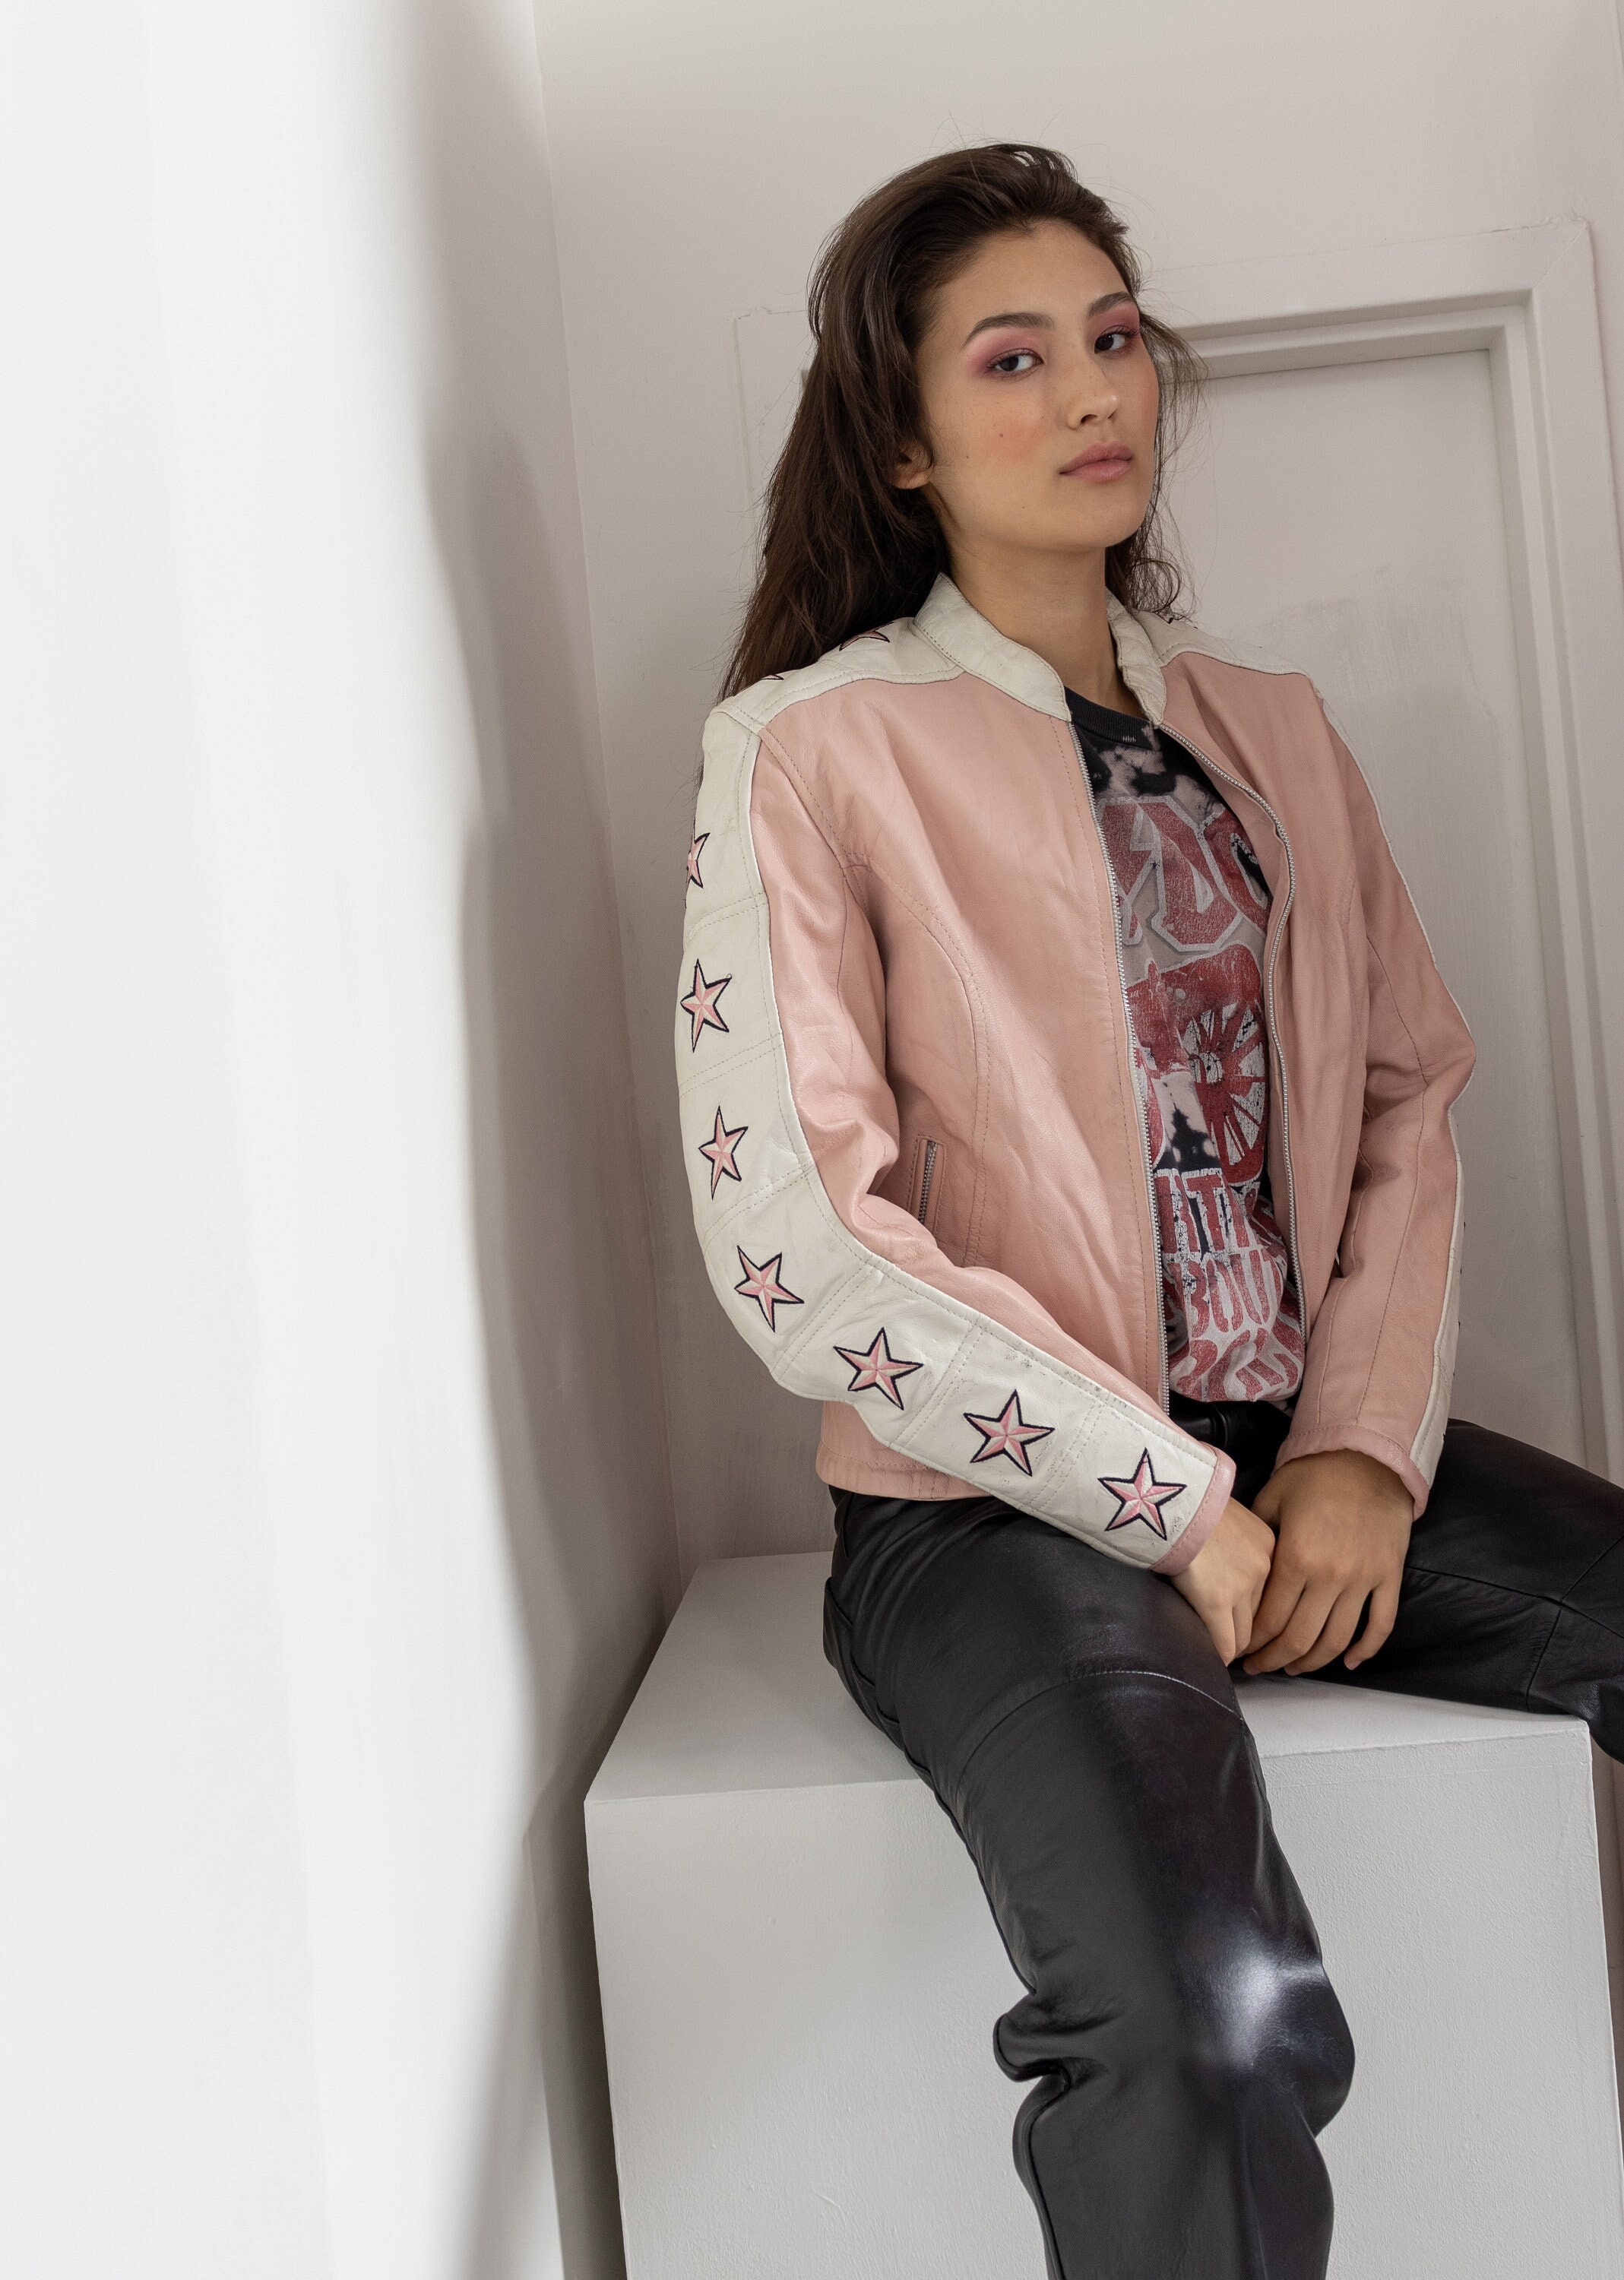 Best 25+ Deals for Hot Pink Leather Jacket